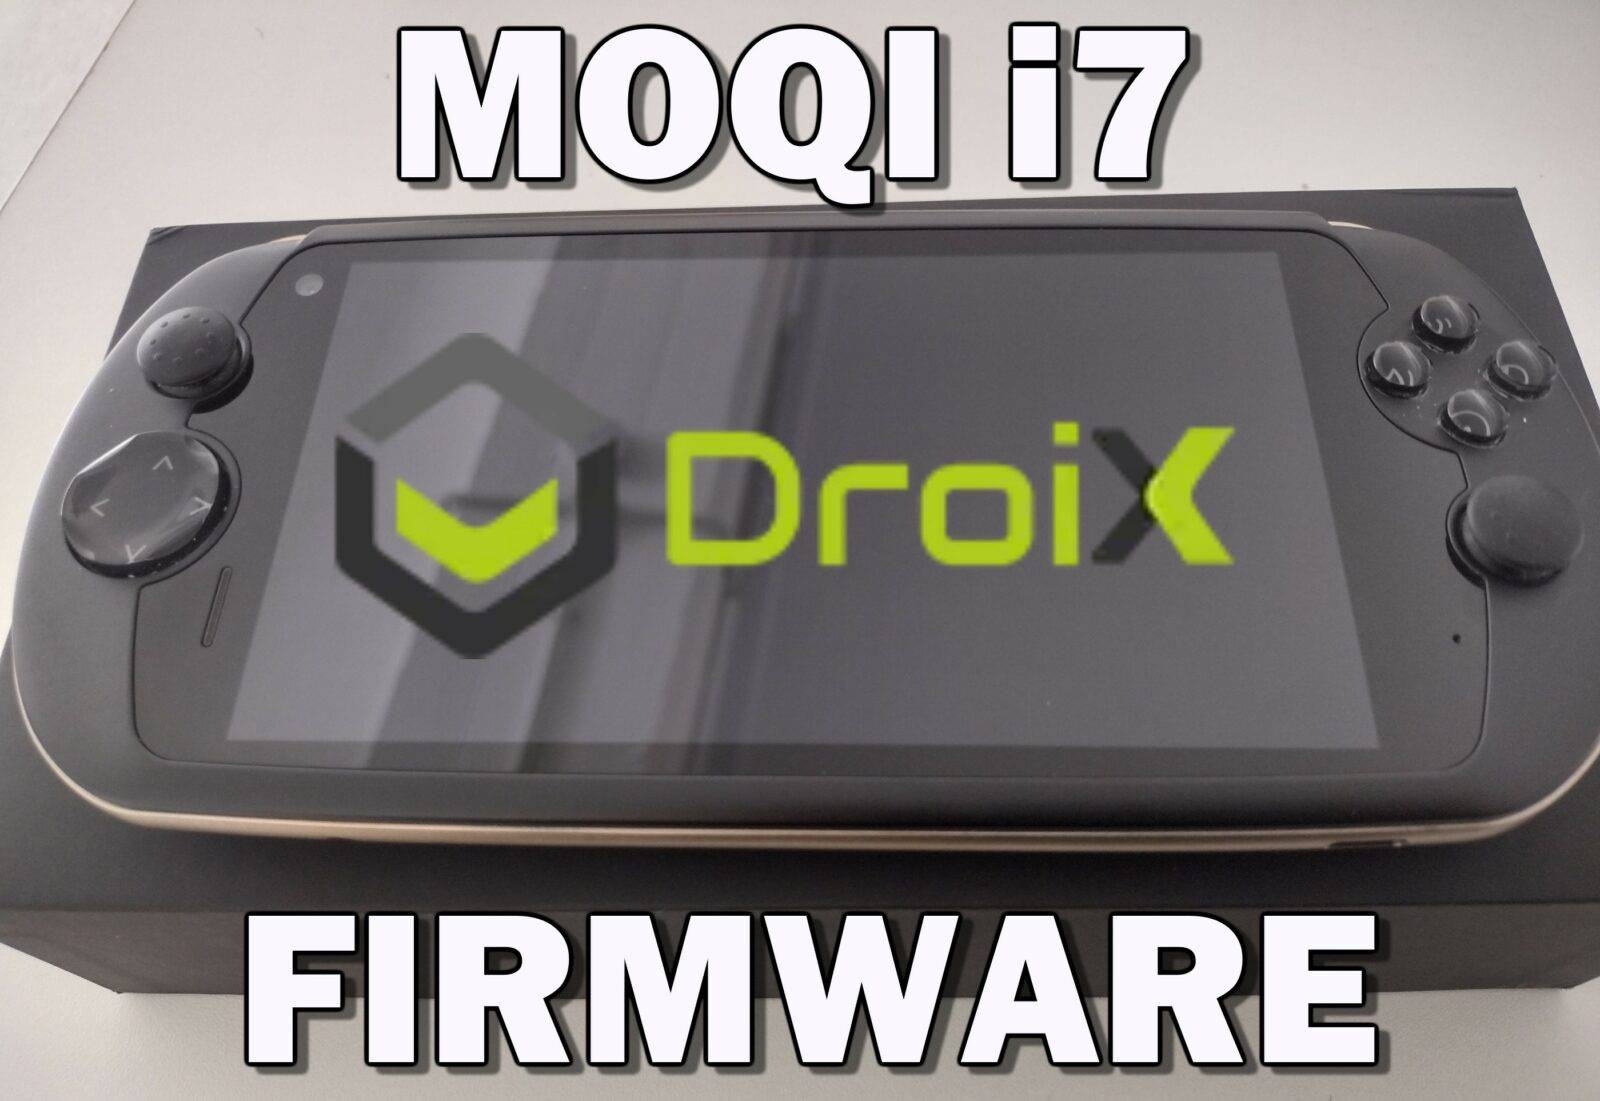 MOQI i7 Firmware - Banner